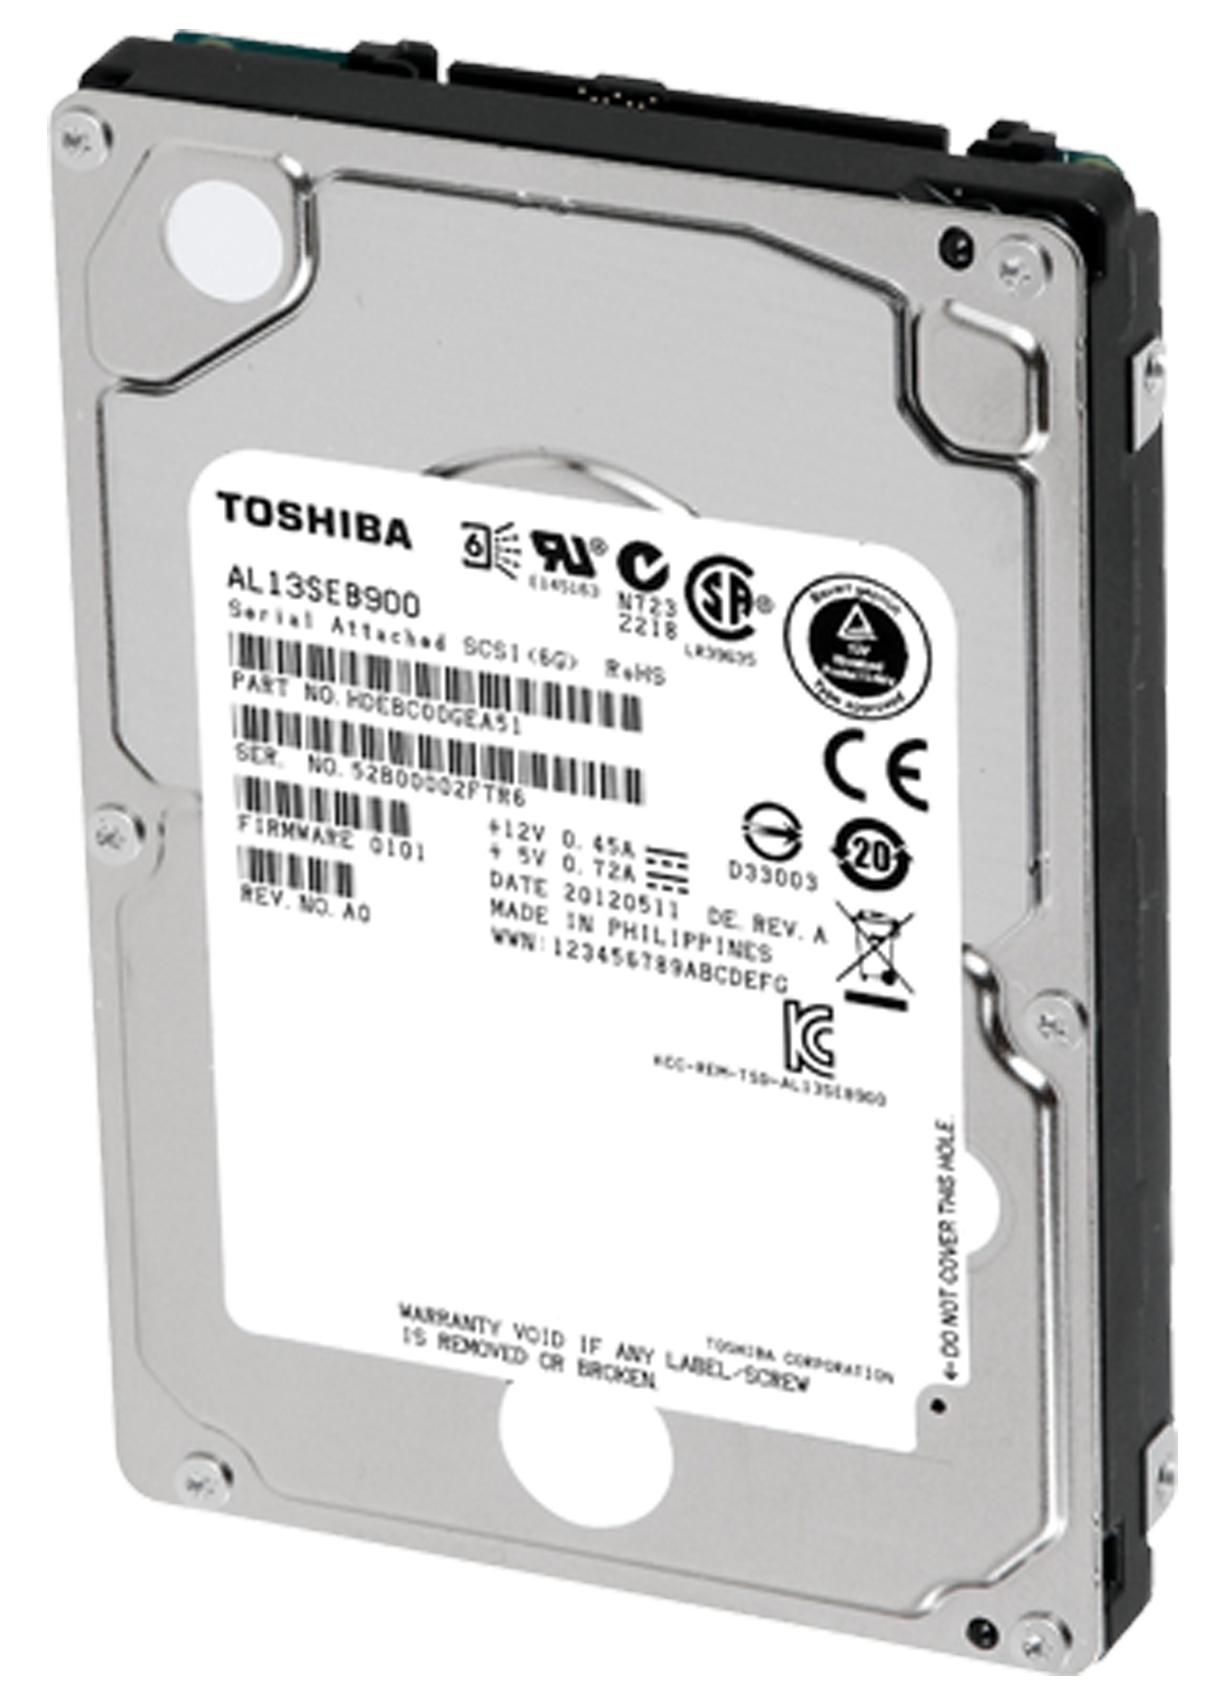 Toshiba Announces Next Generation 10,000 Rpm Class Enterprise Storage Hard Disk Drive Series   Press   Toshiba - Hard Drive, Transparent background PNG HD thumbnail